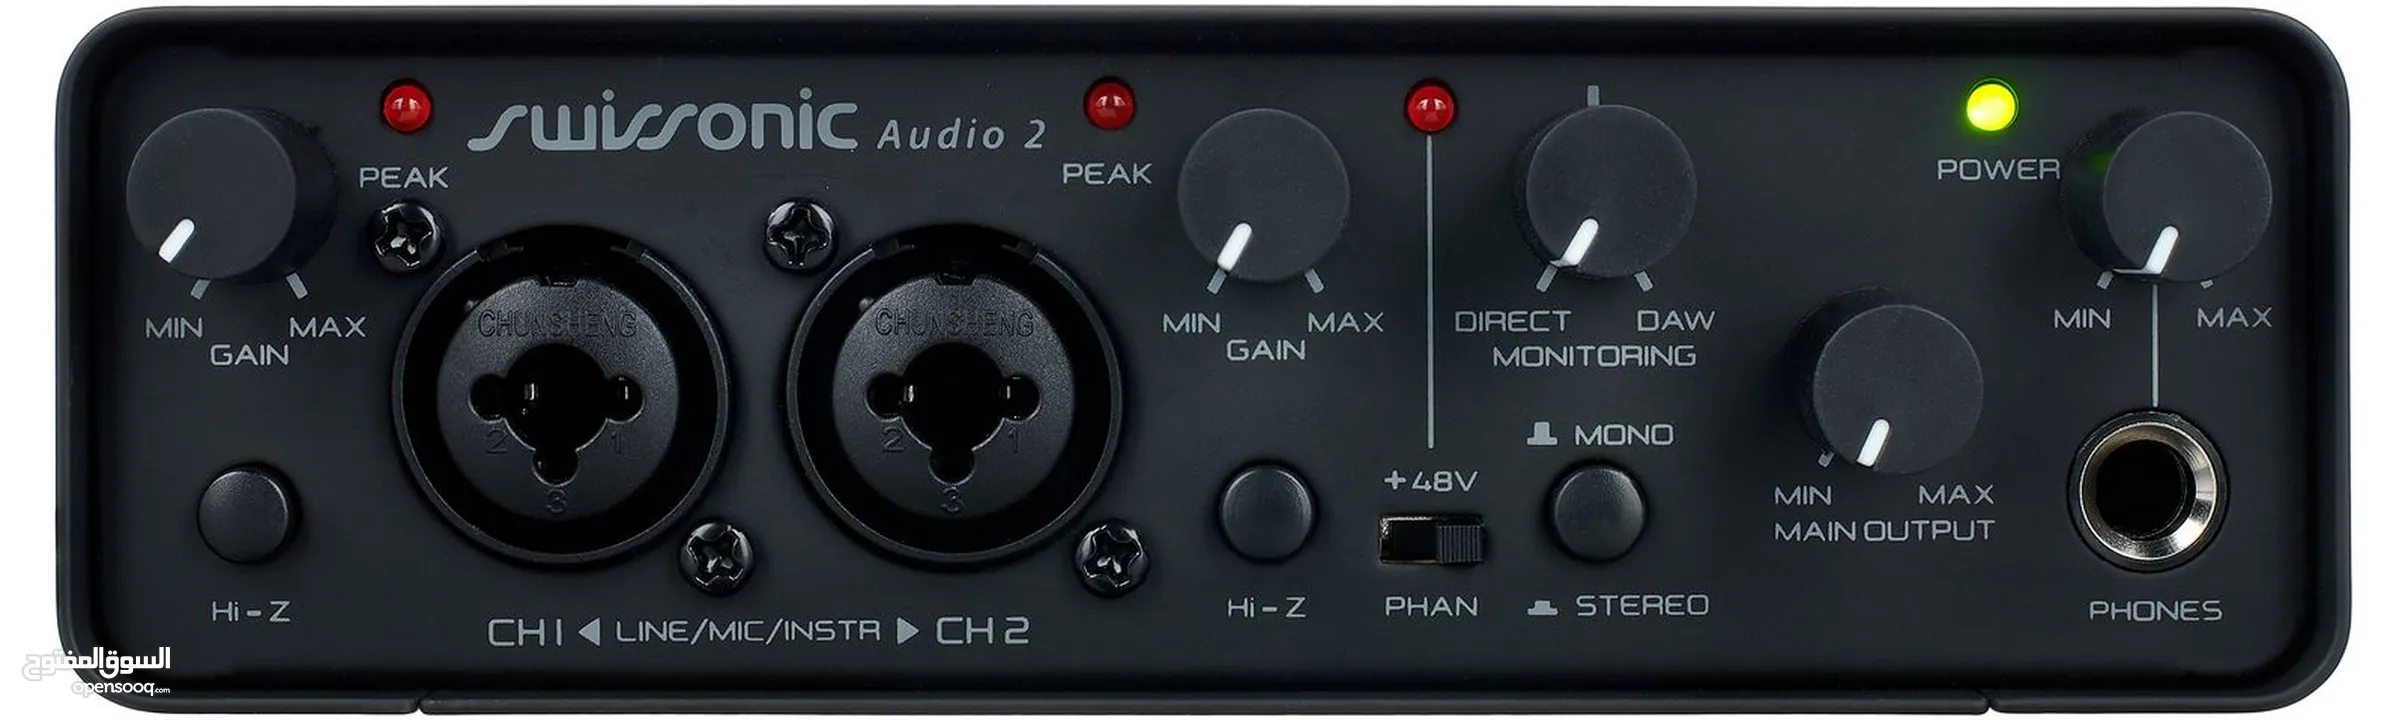 Swissonic Audio 2 Interface